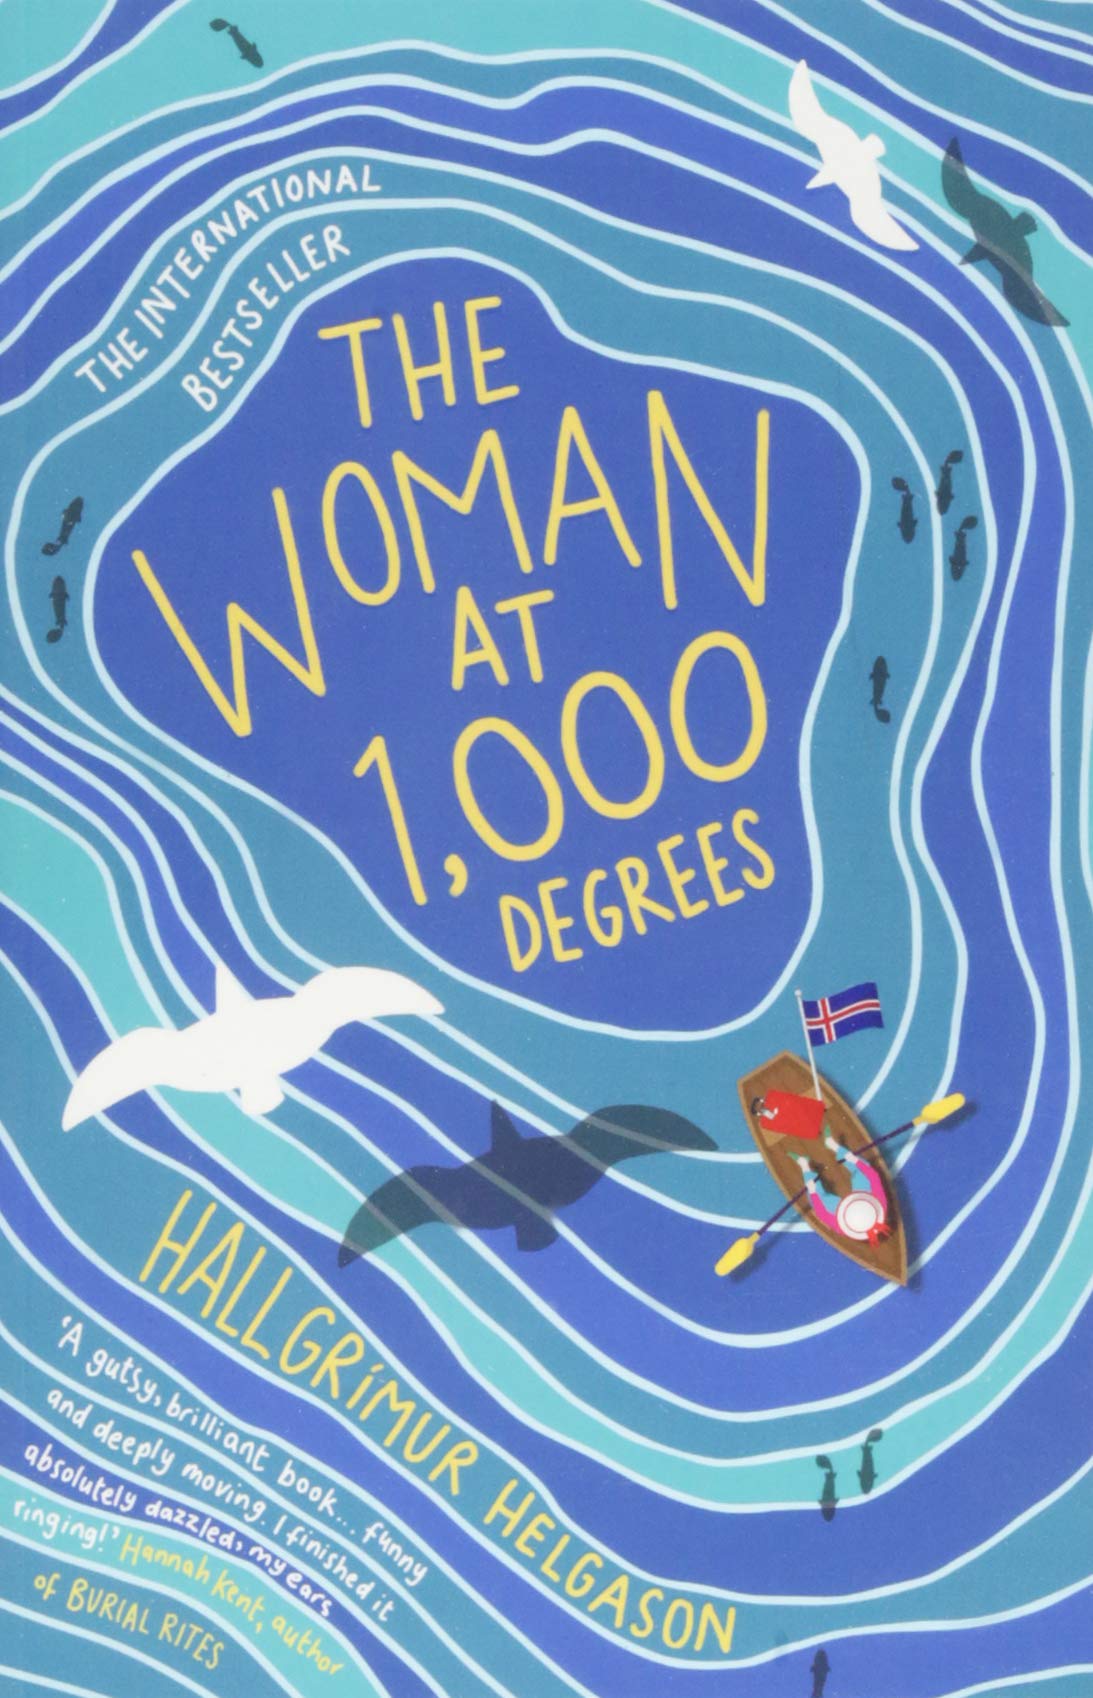 The Woman at 1,000 Degrees | Hallgrimur Helgason